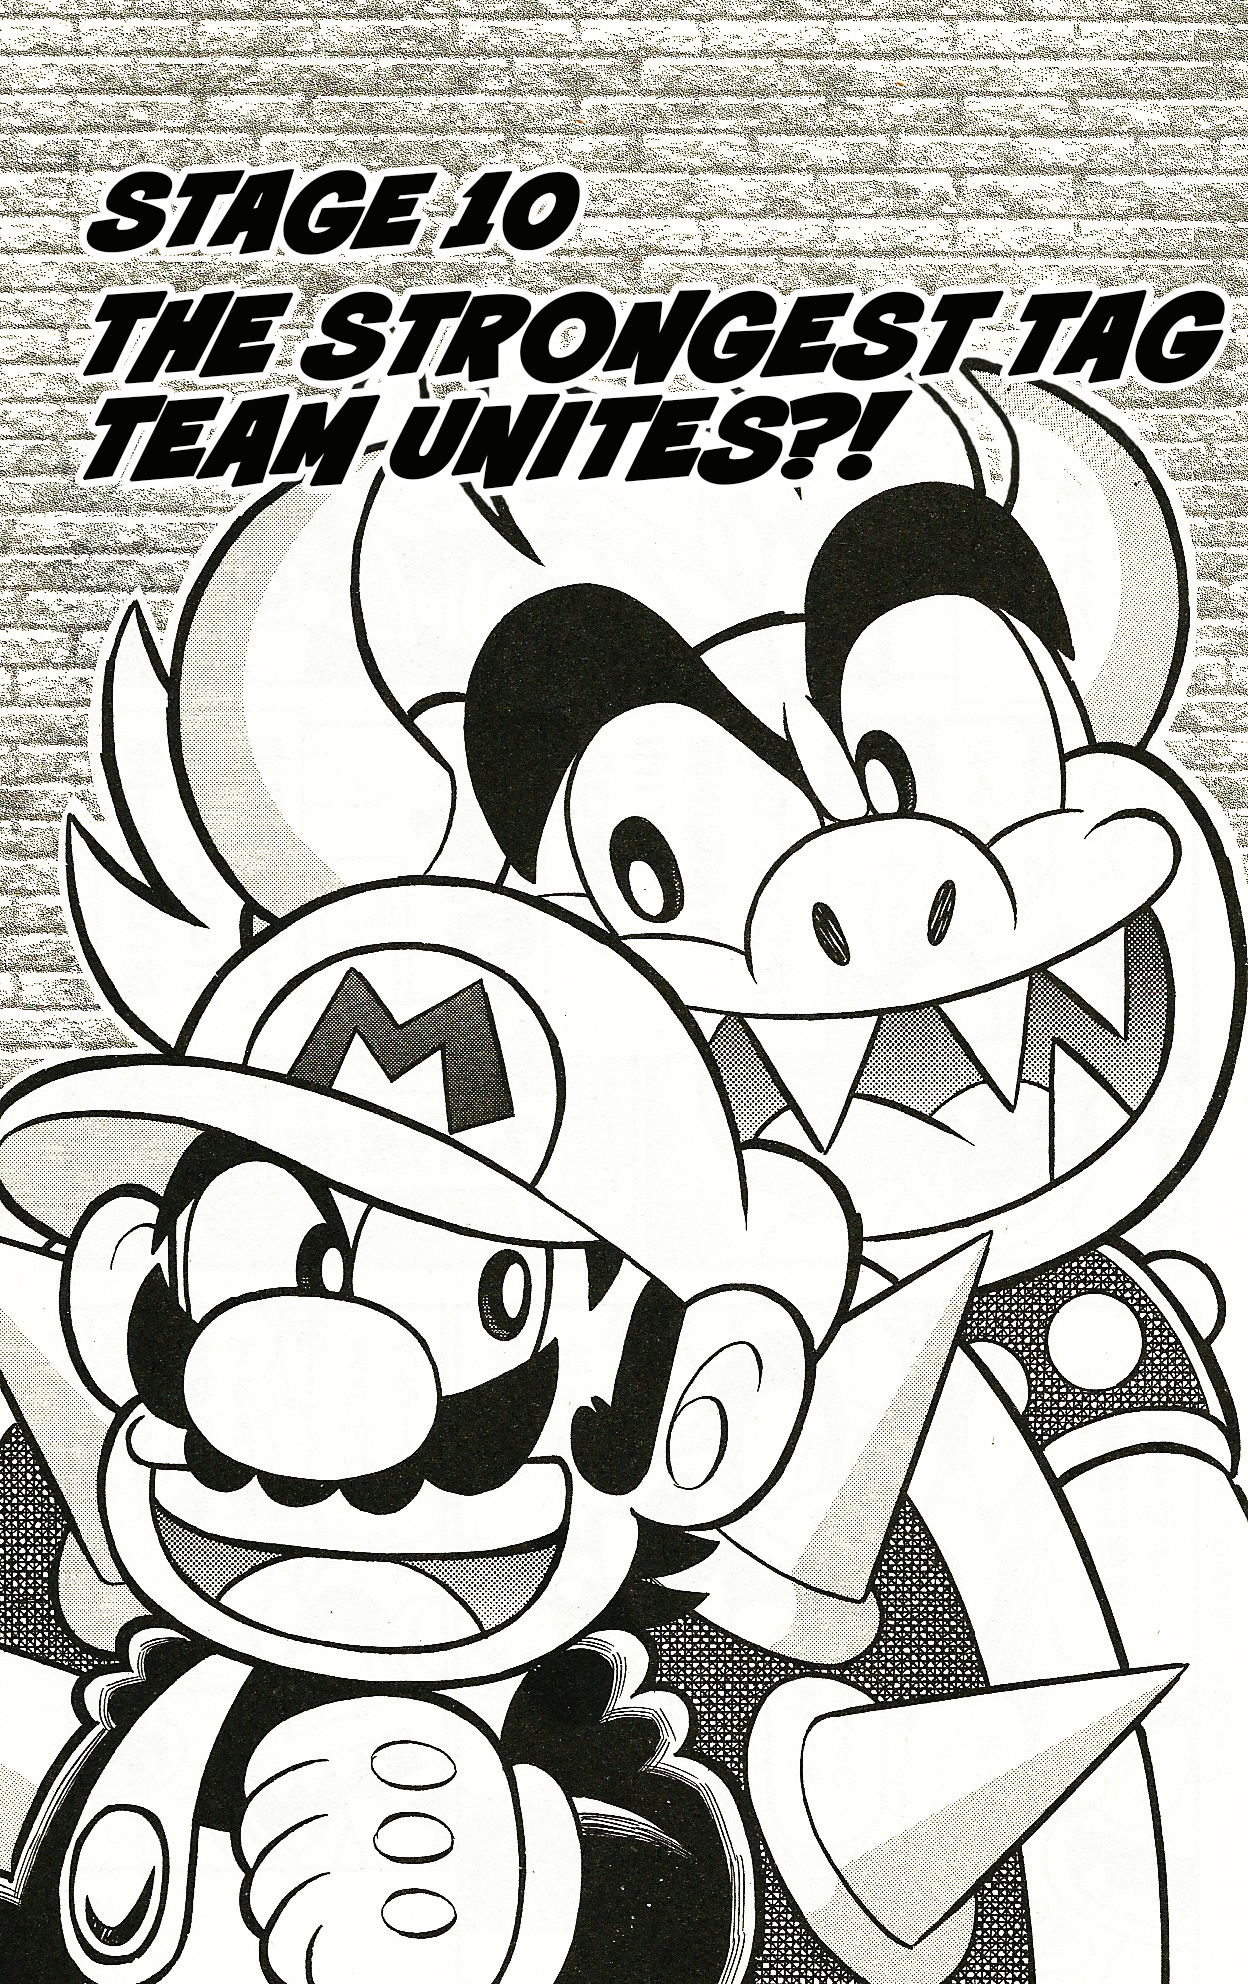 Super Mario-Kun Vol.37 Chapter 10: The Strongest Tag Team Unites?! - Picture 2